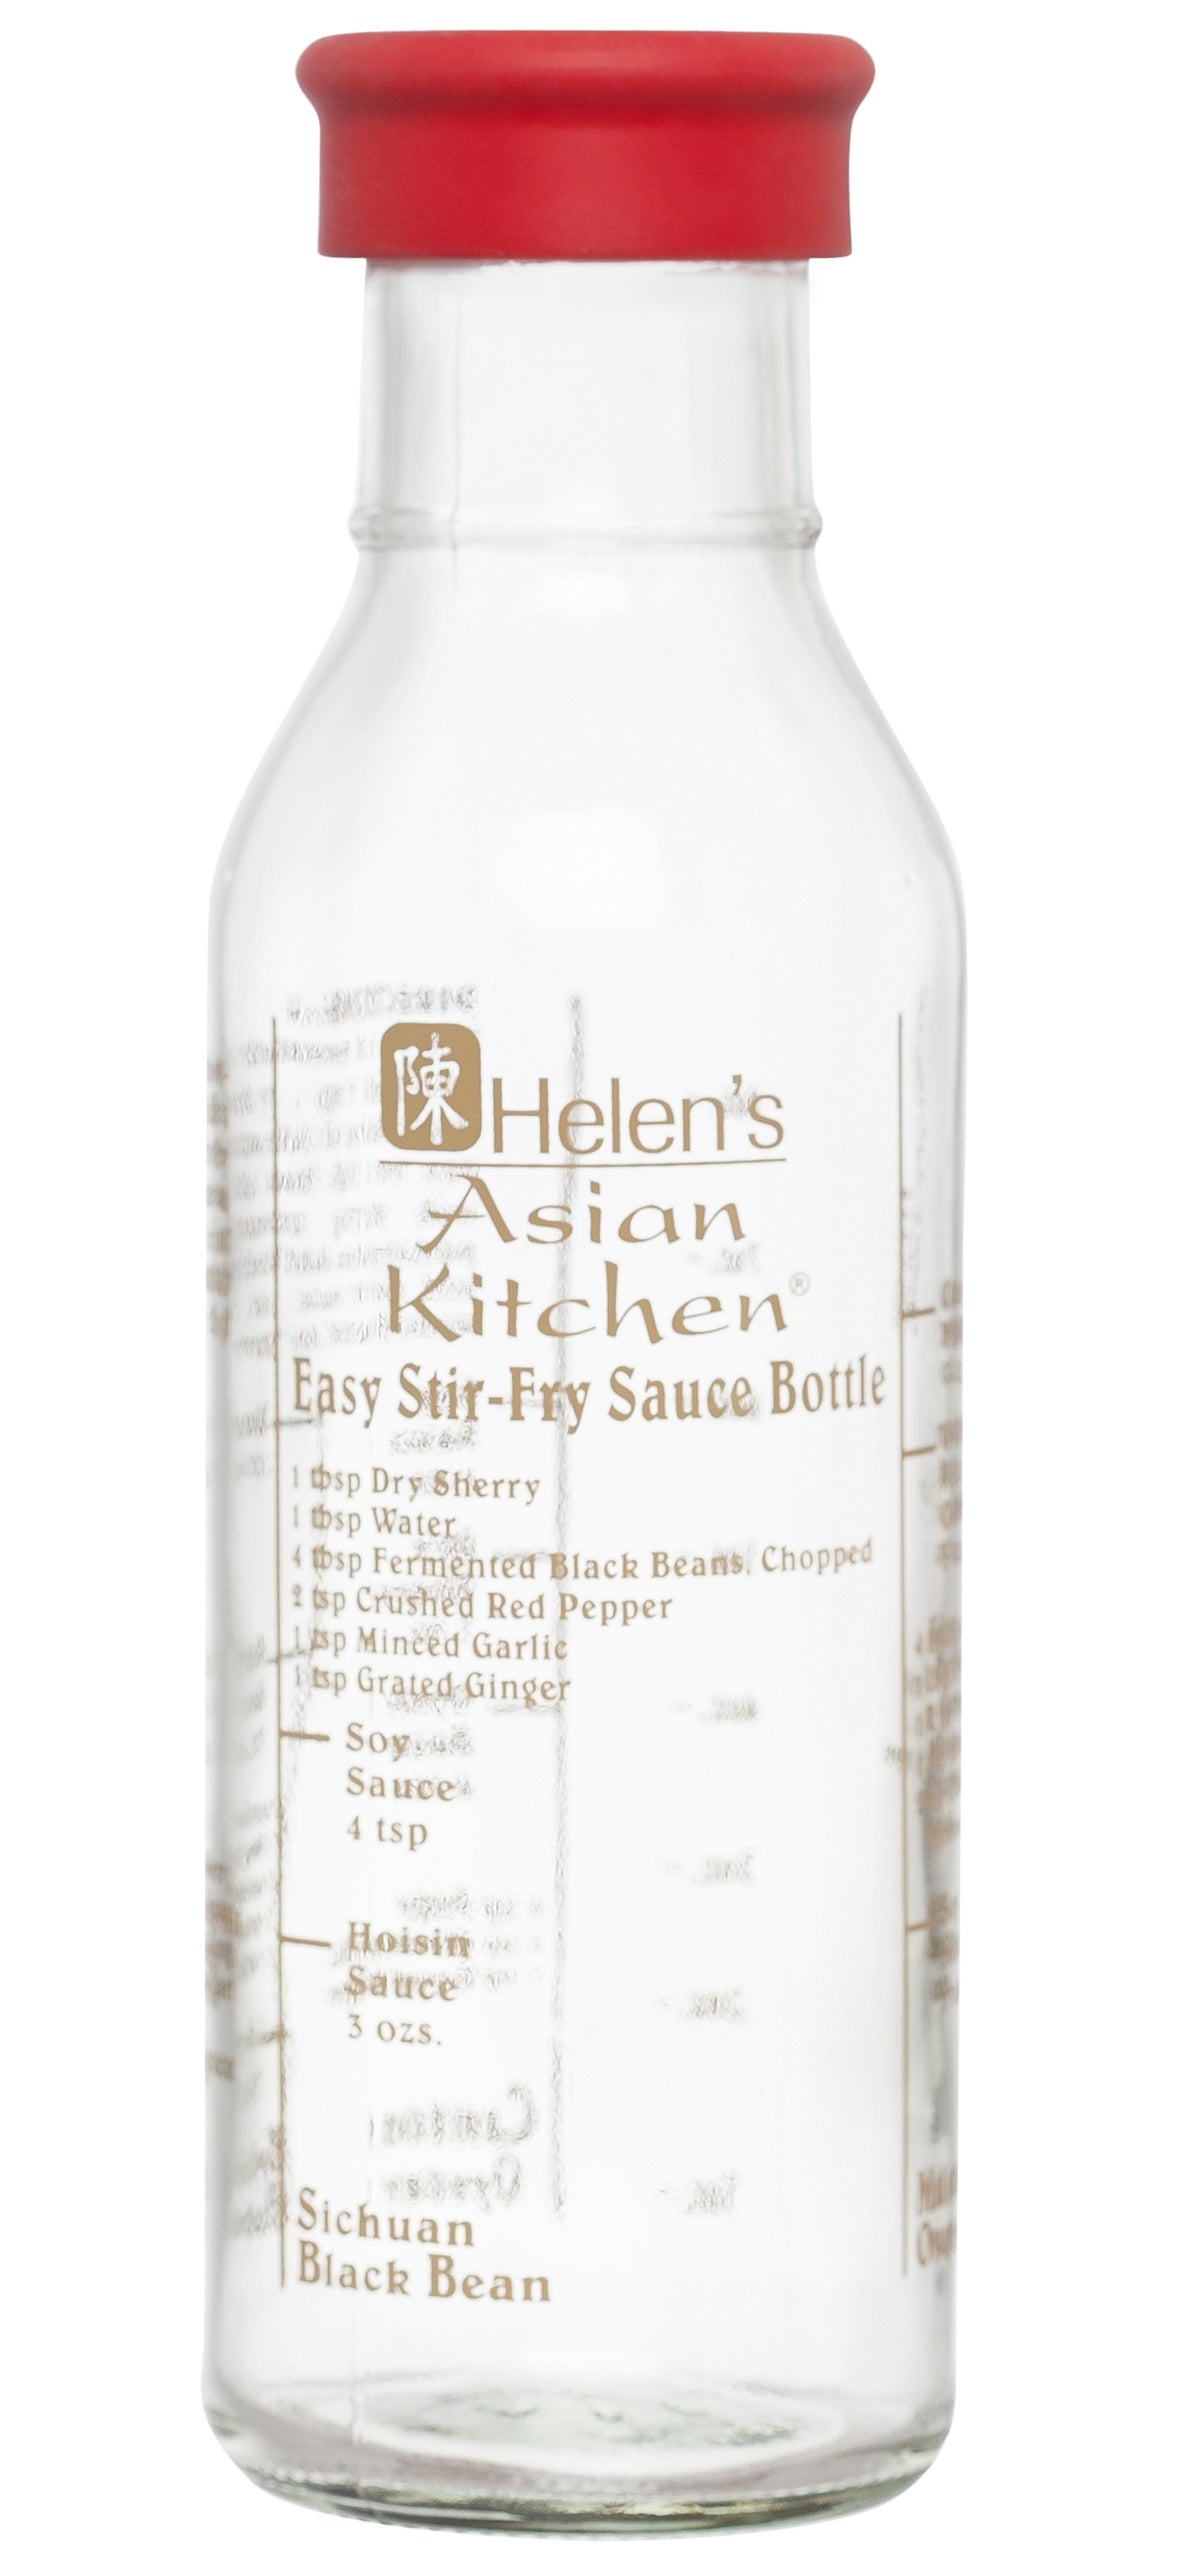 Helen's Asian Kitchen 97112 Kolder Stir-Fry Sauce Bottle, 13 Oz